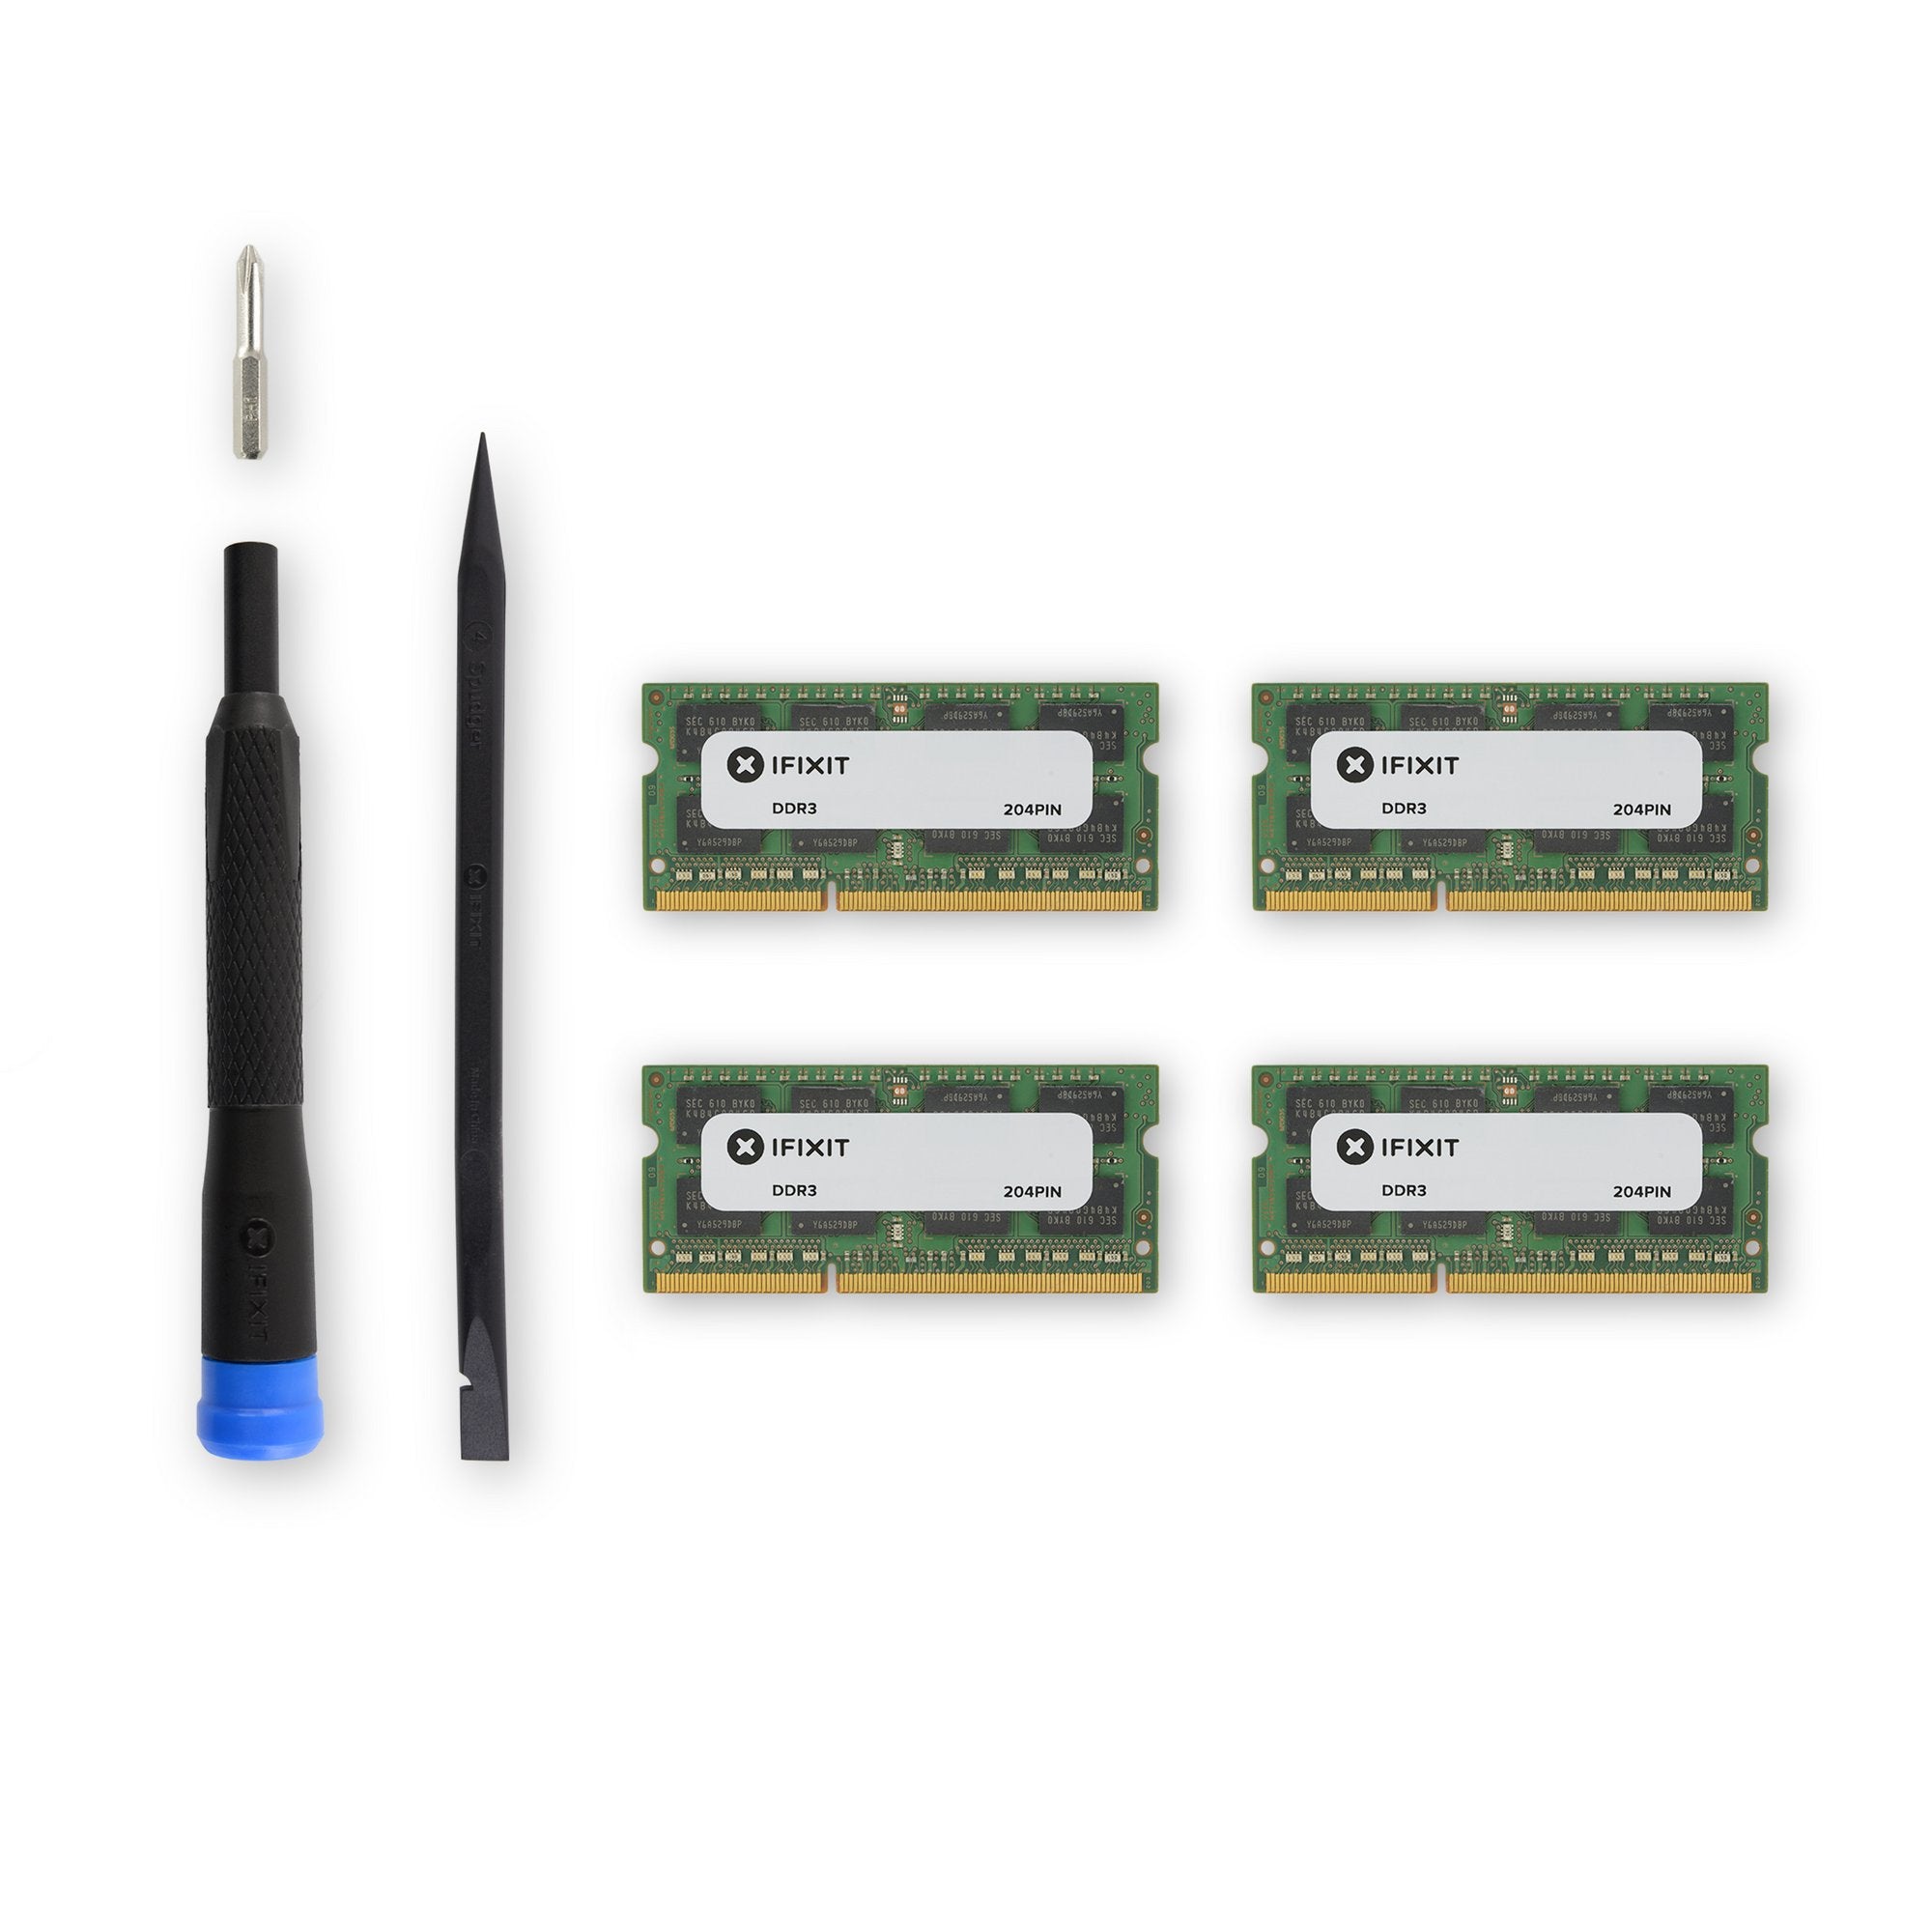 iMac Intel 27" EMC 2374 (Late 2009) Memory Maxxer RAM Upgrade Kit